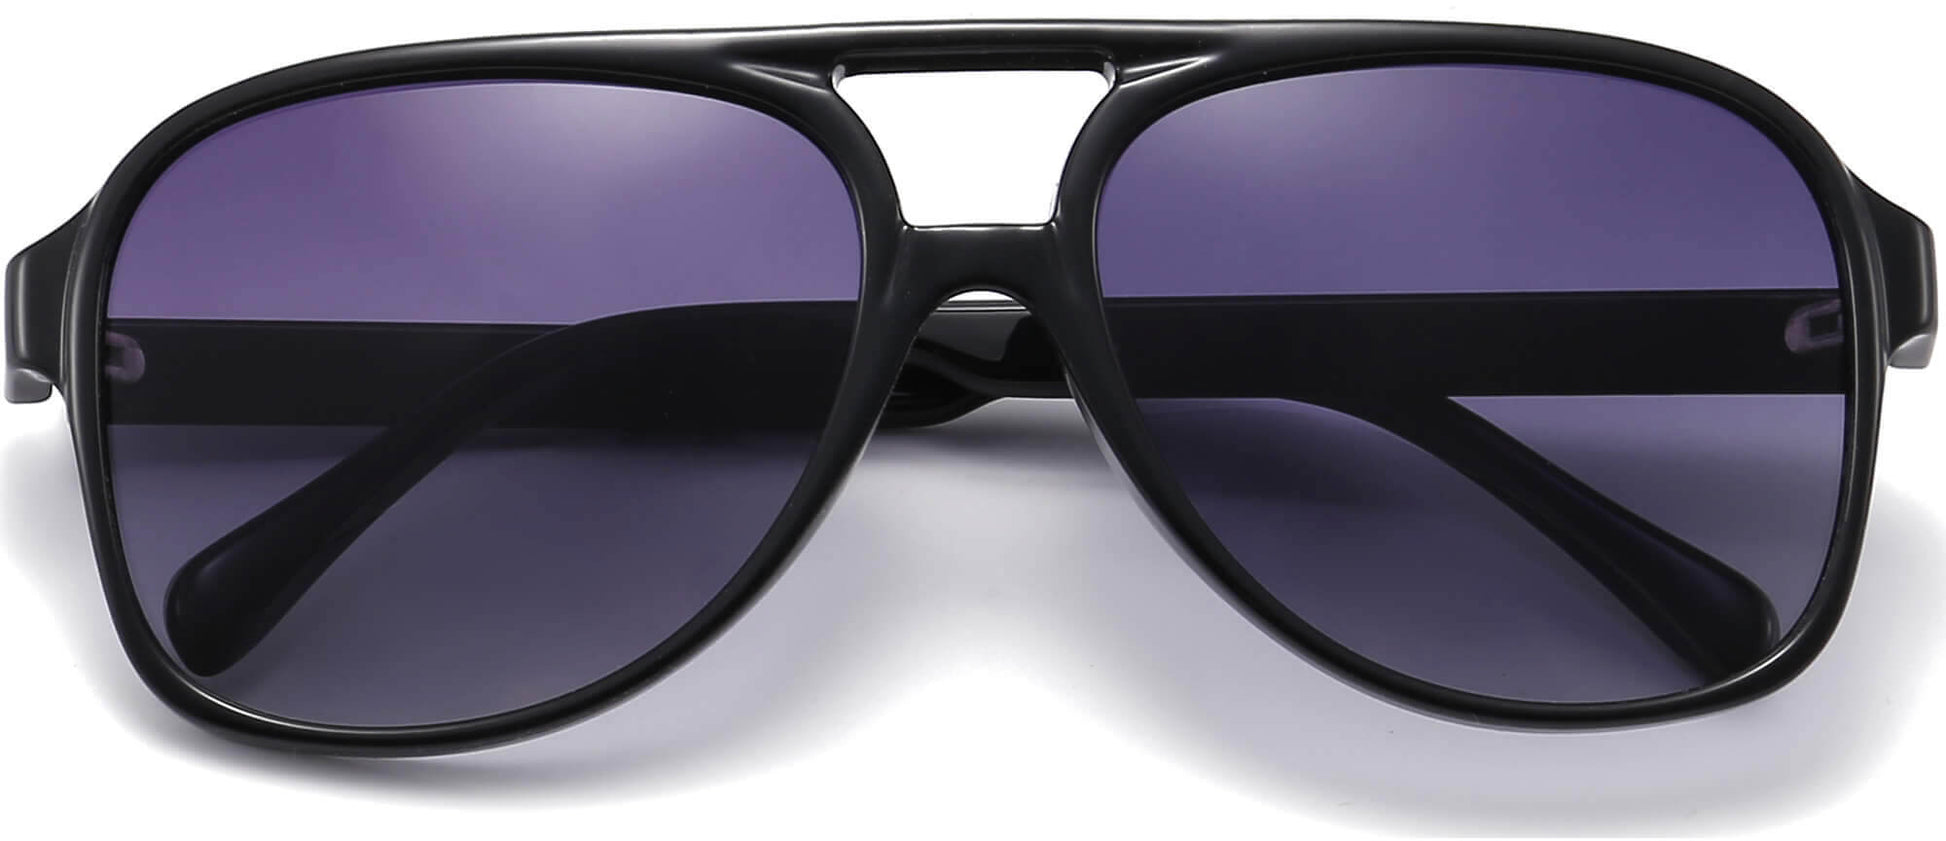 Asher Black Plastic Sunglasses from ANRRI